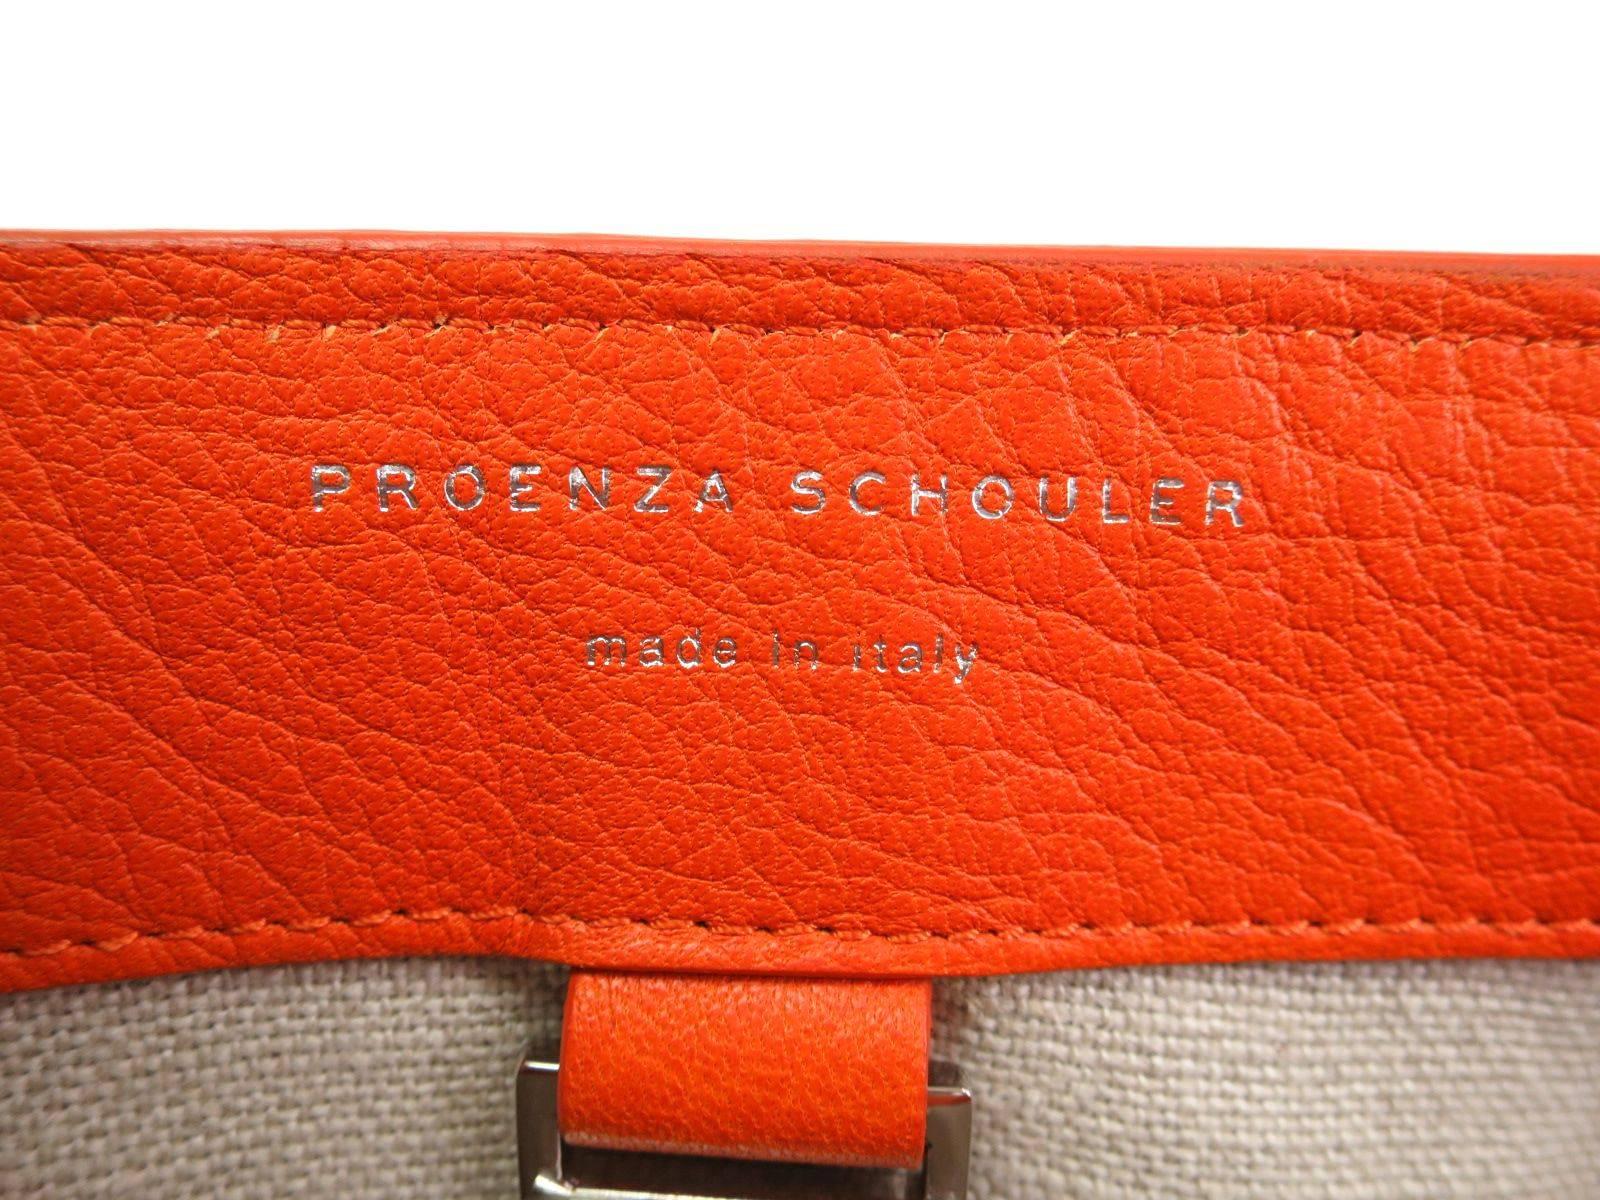 Women's Proenza Schouler Orange Leather Gold Stud Hardware Satchel Tote Shoulder Bag